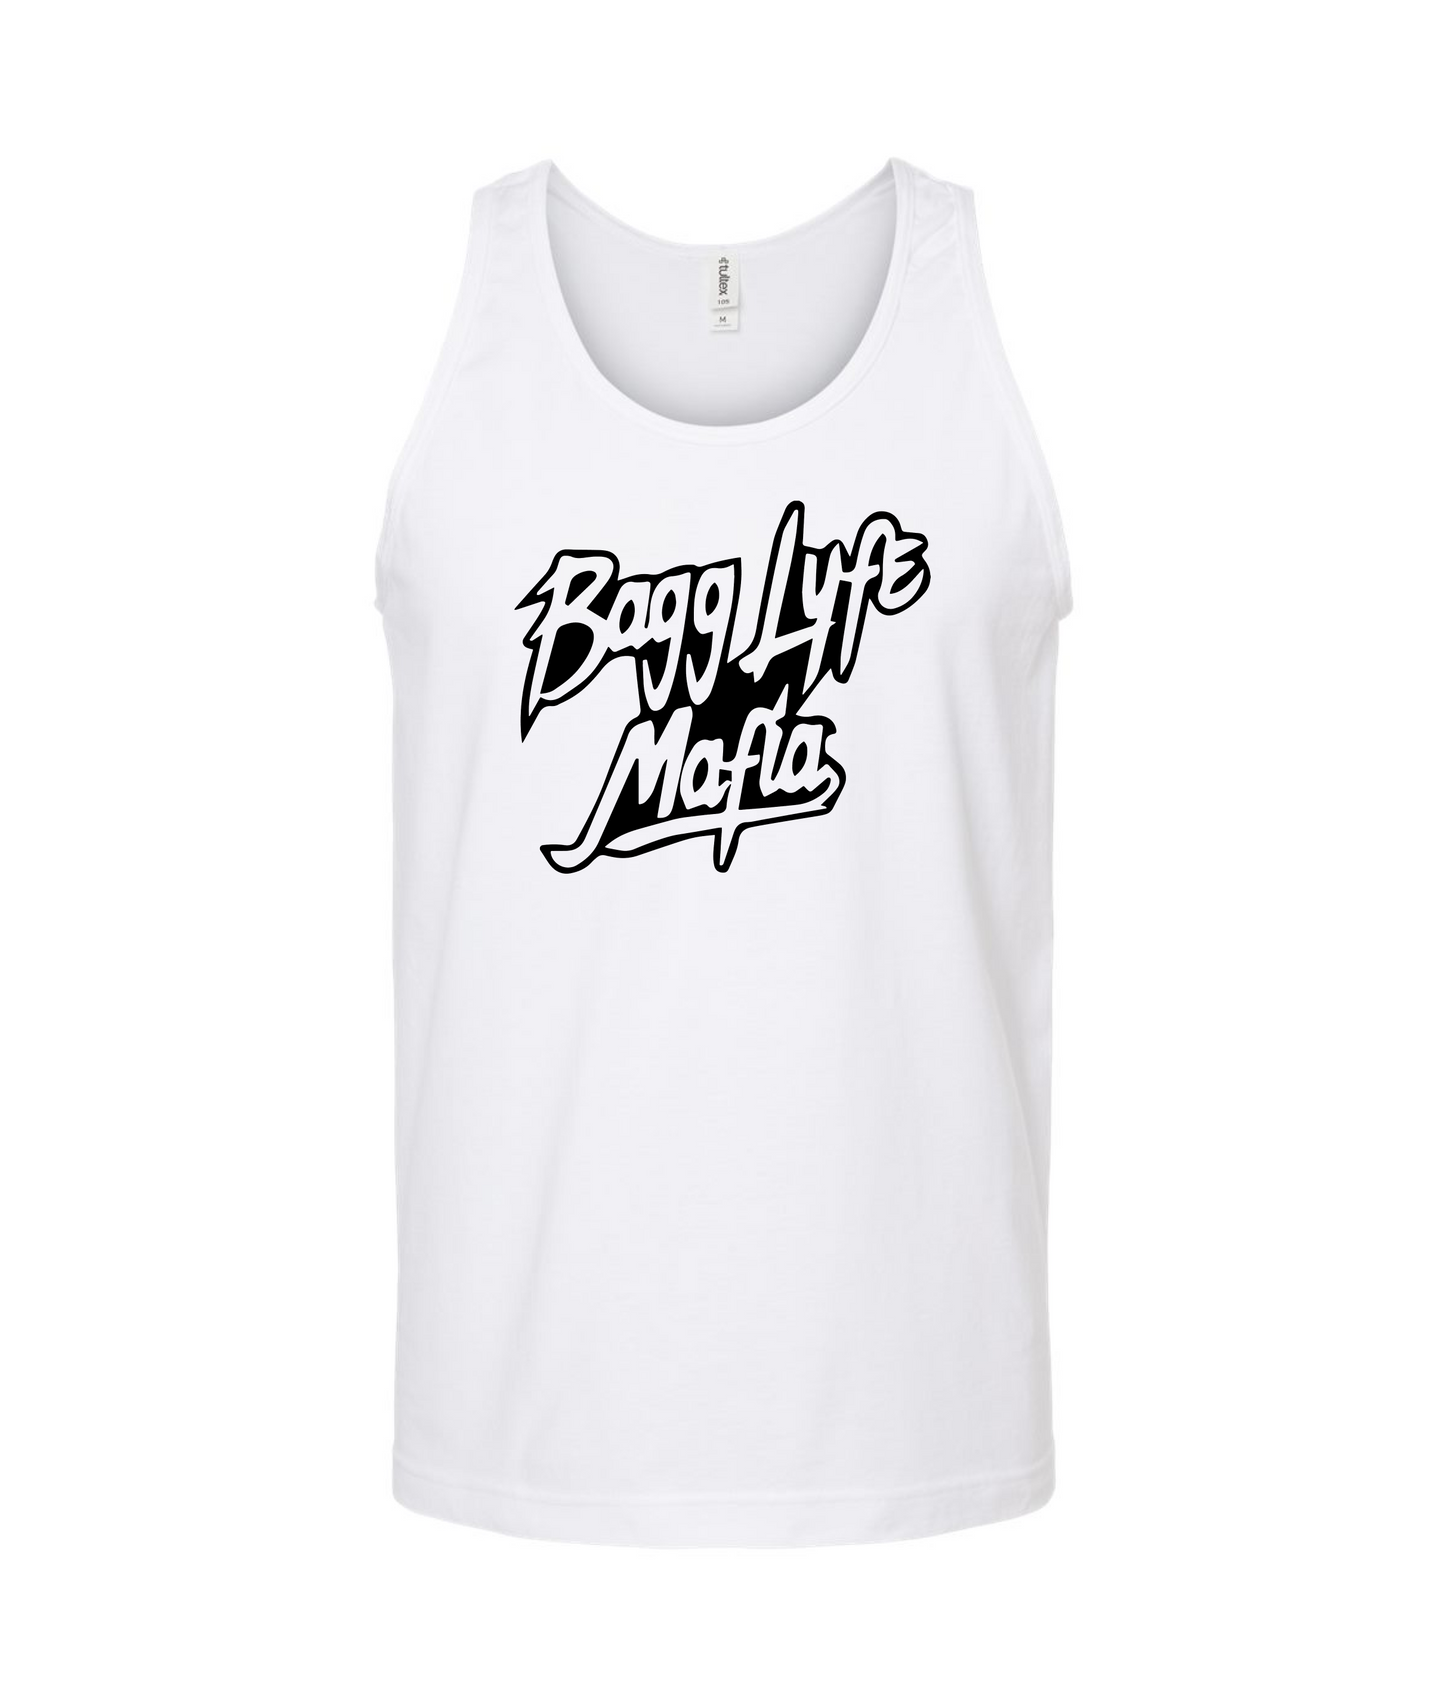 Bagglyfe Mafia Clothing - Logo - White Tank Top